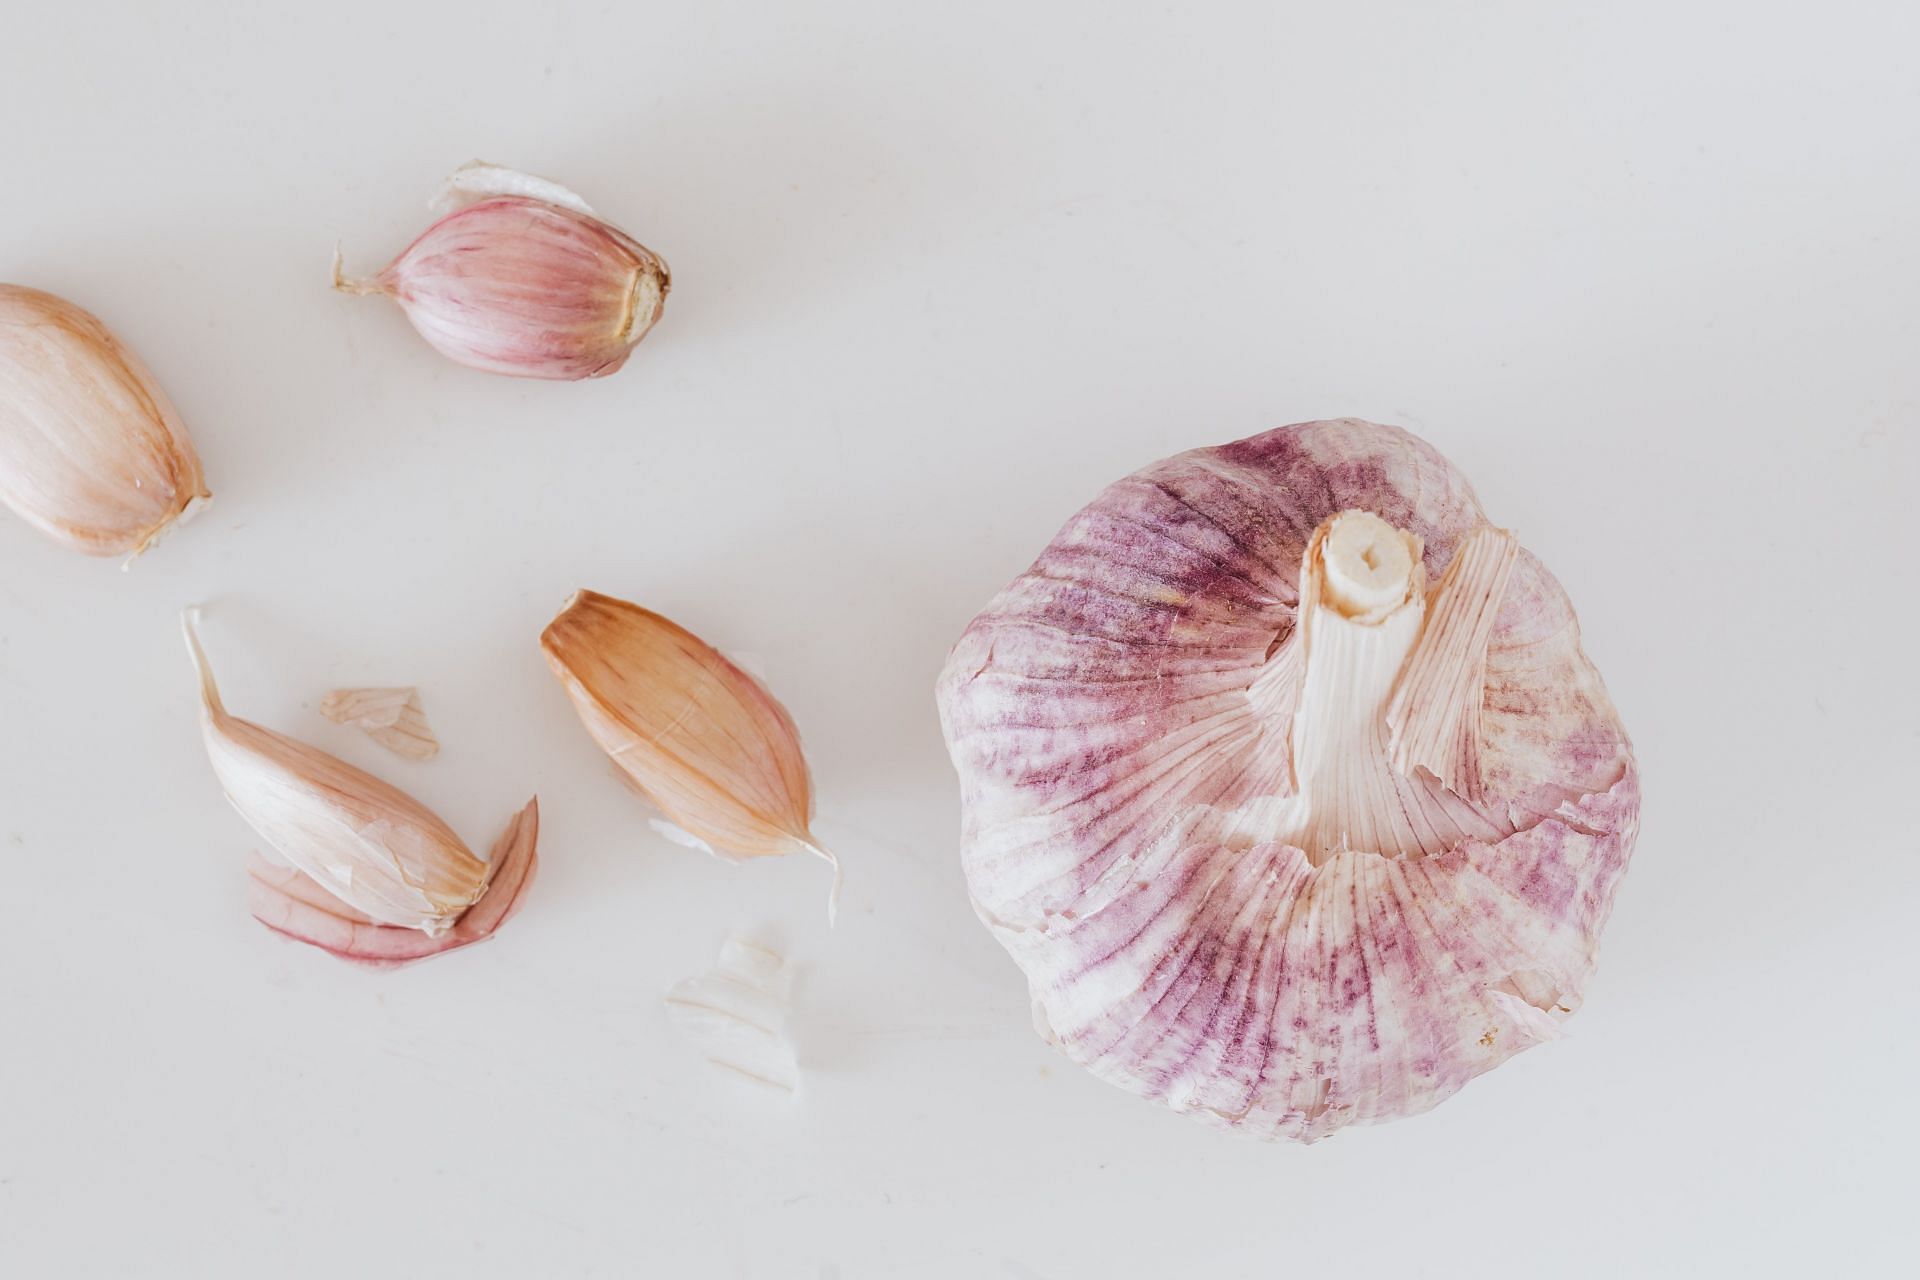 Garlic has anti-inflammatory properties which is beneficial for skin. (Image via Pexels/Karolina Grabowska)